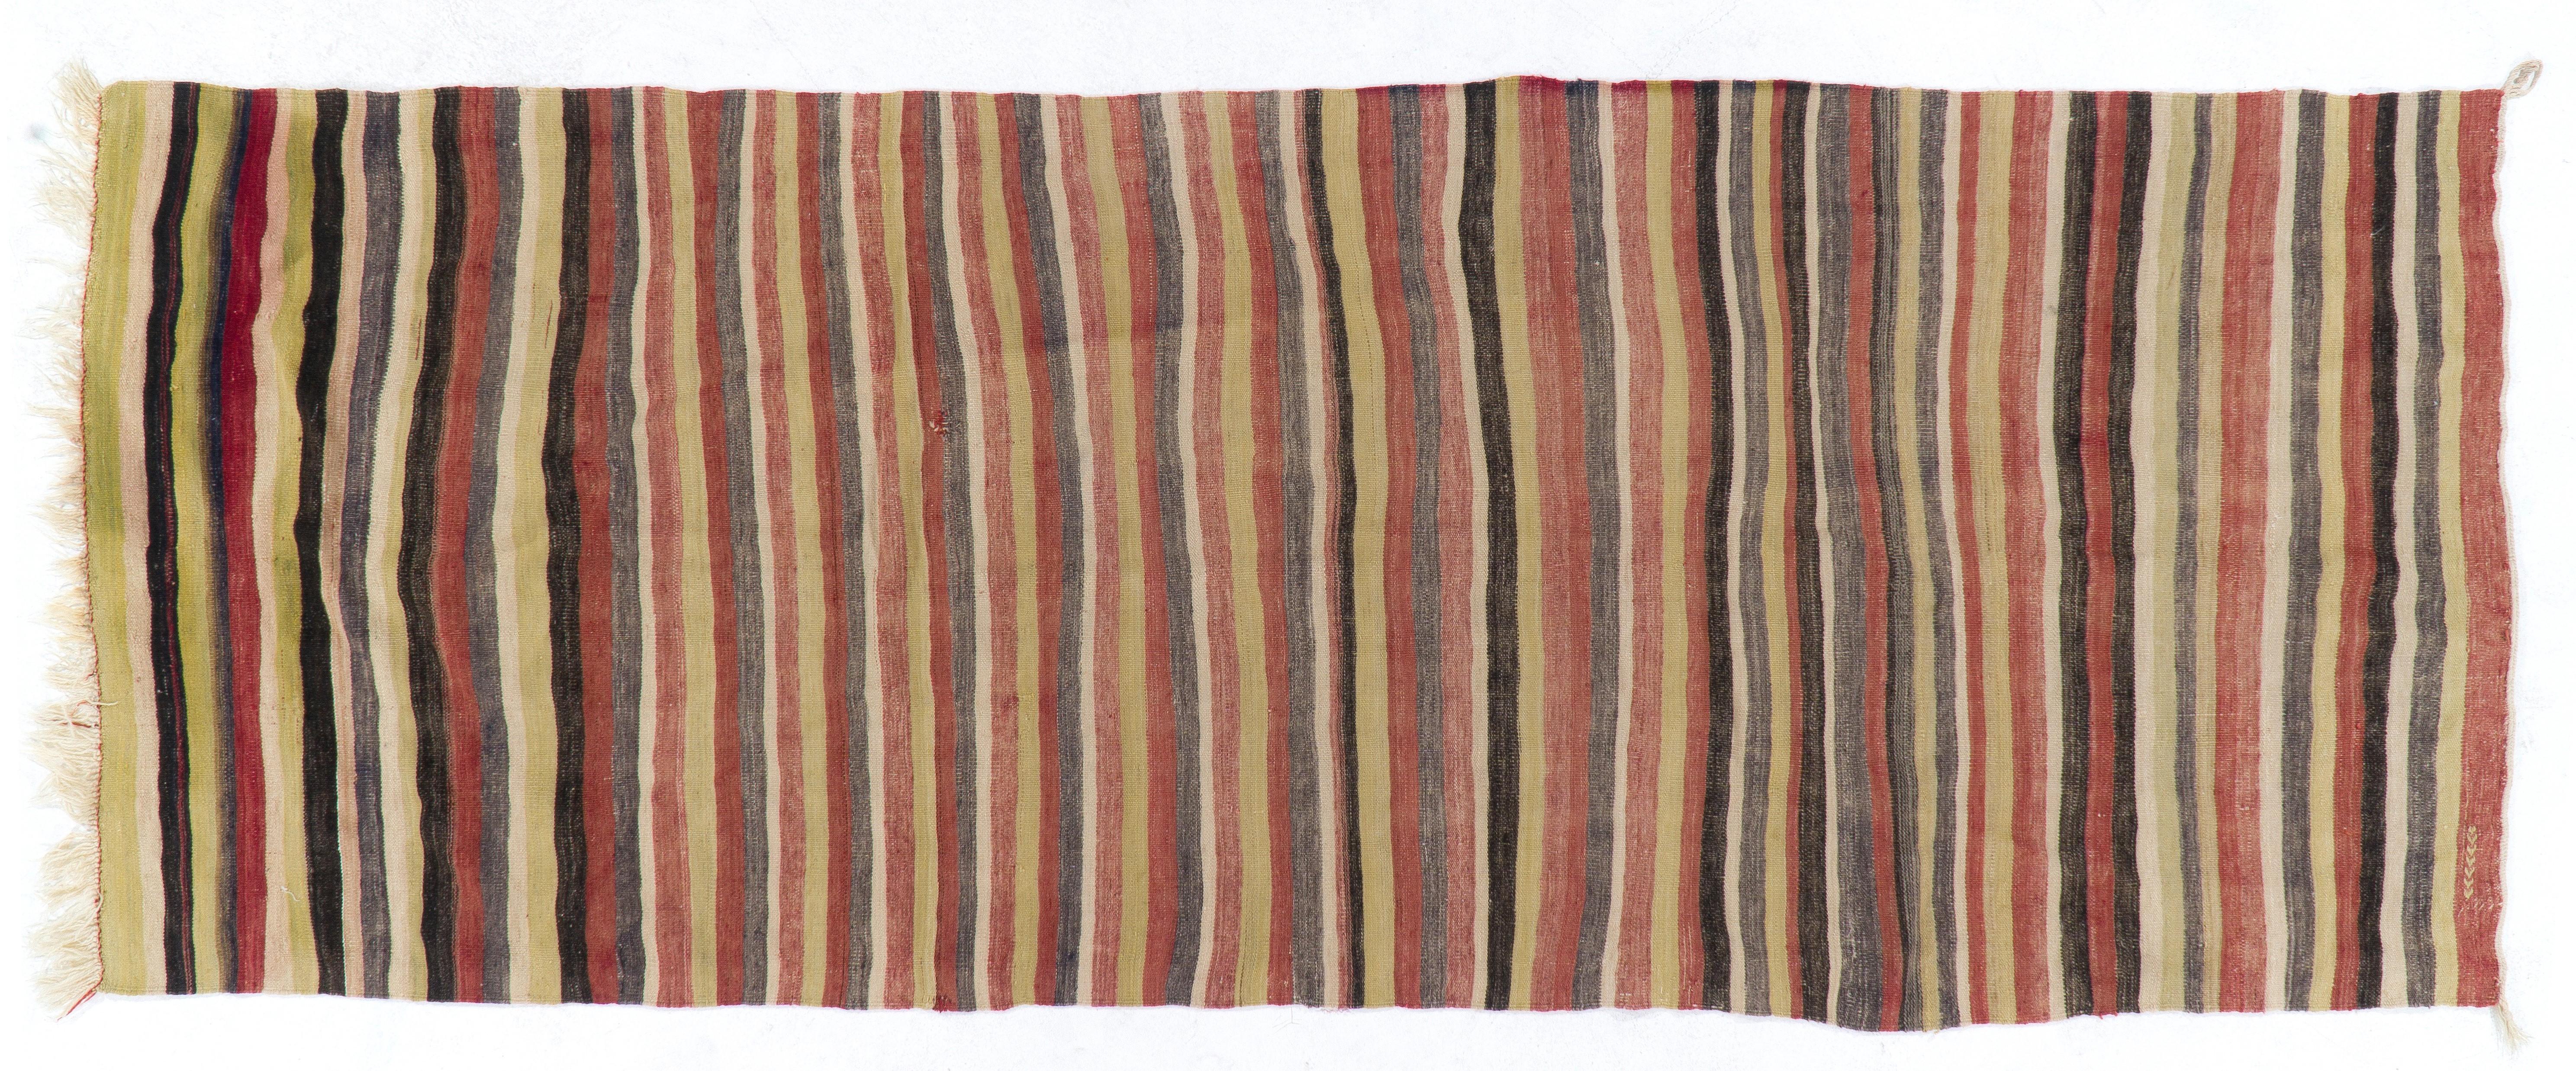 20th Century 4x11 Ft Vintage Handmade Flat-Woven Wool Kilim Runner, Turkish Striped Rug For Sale